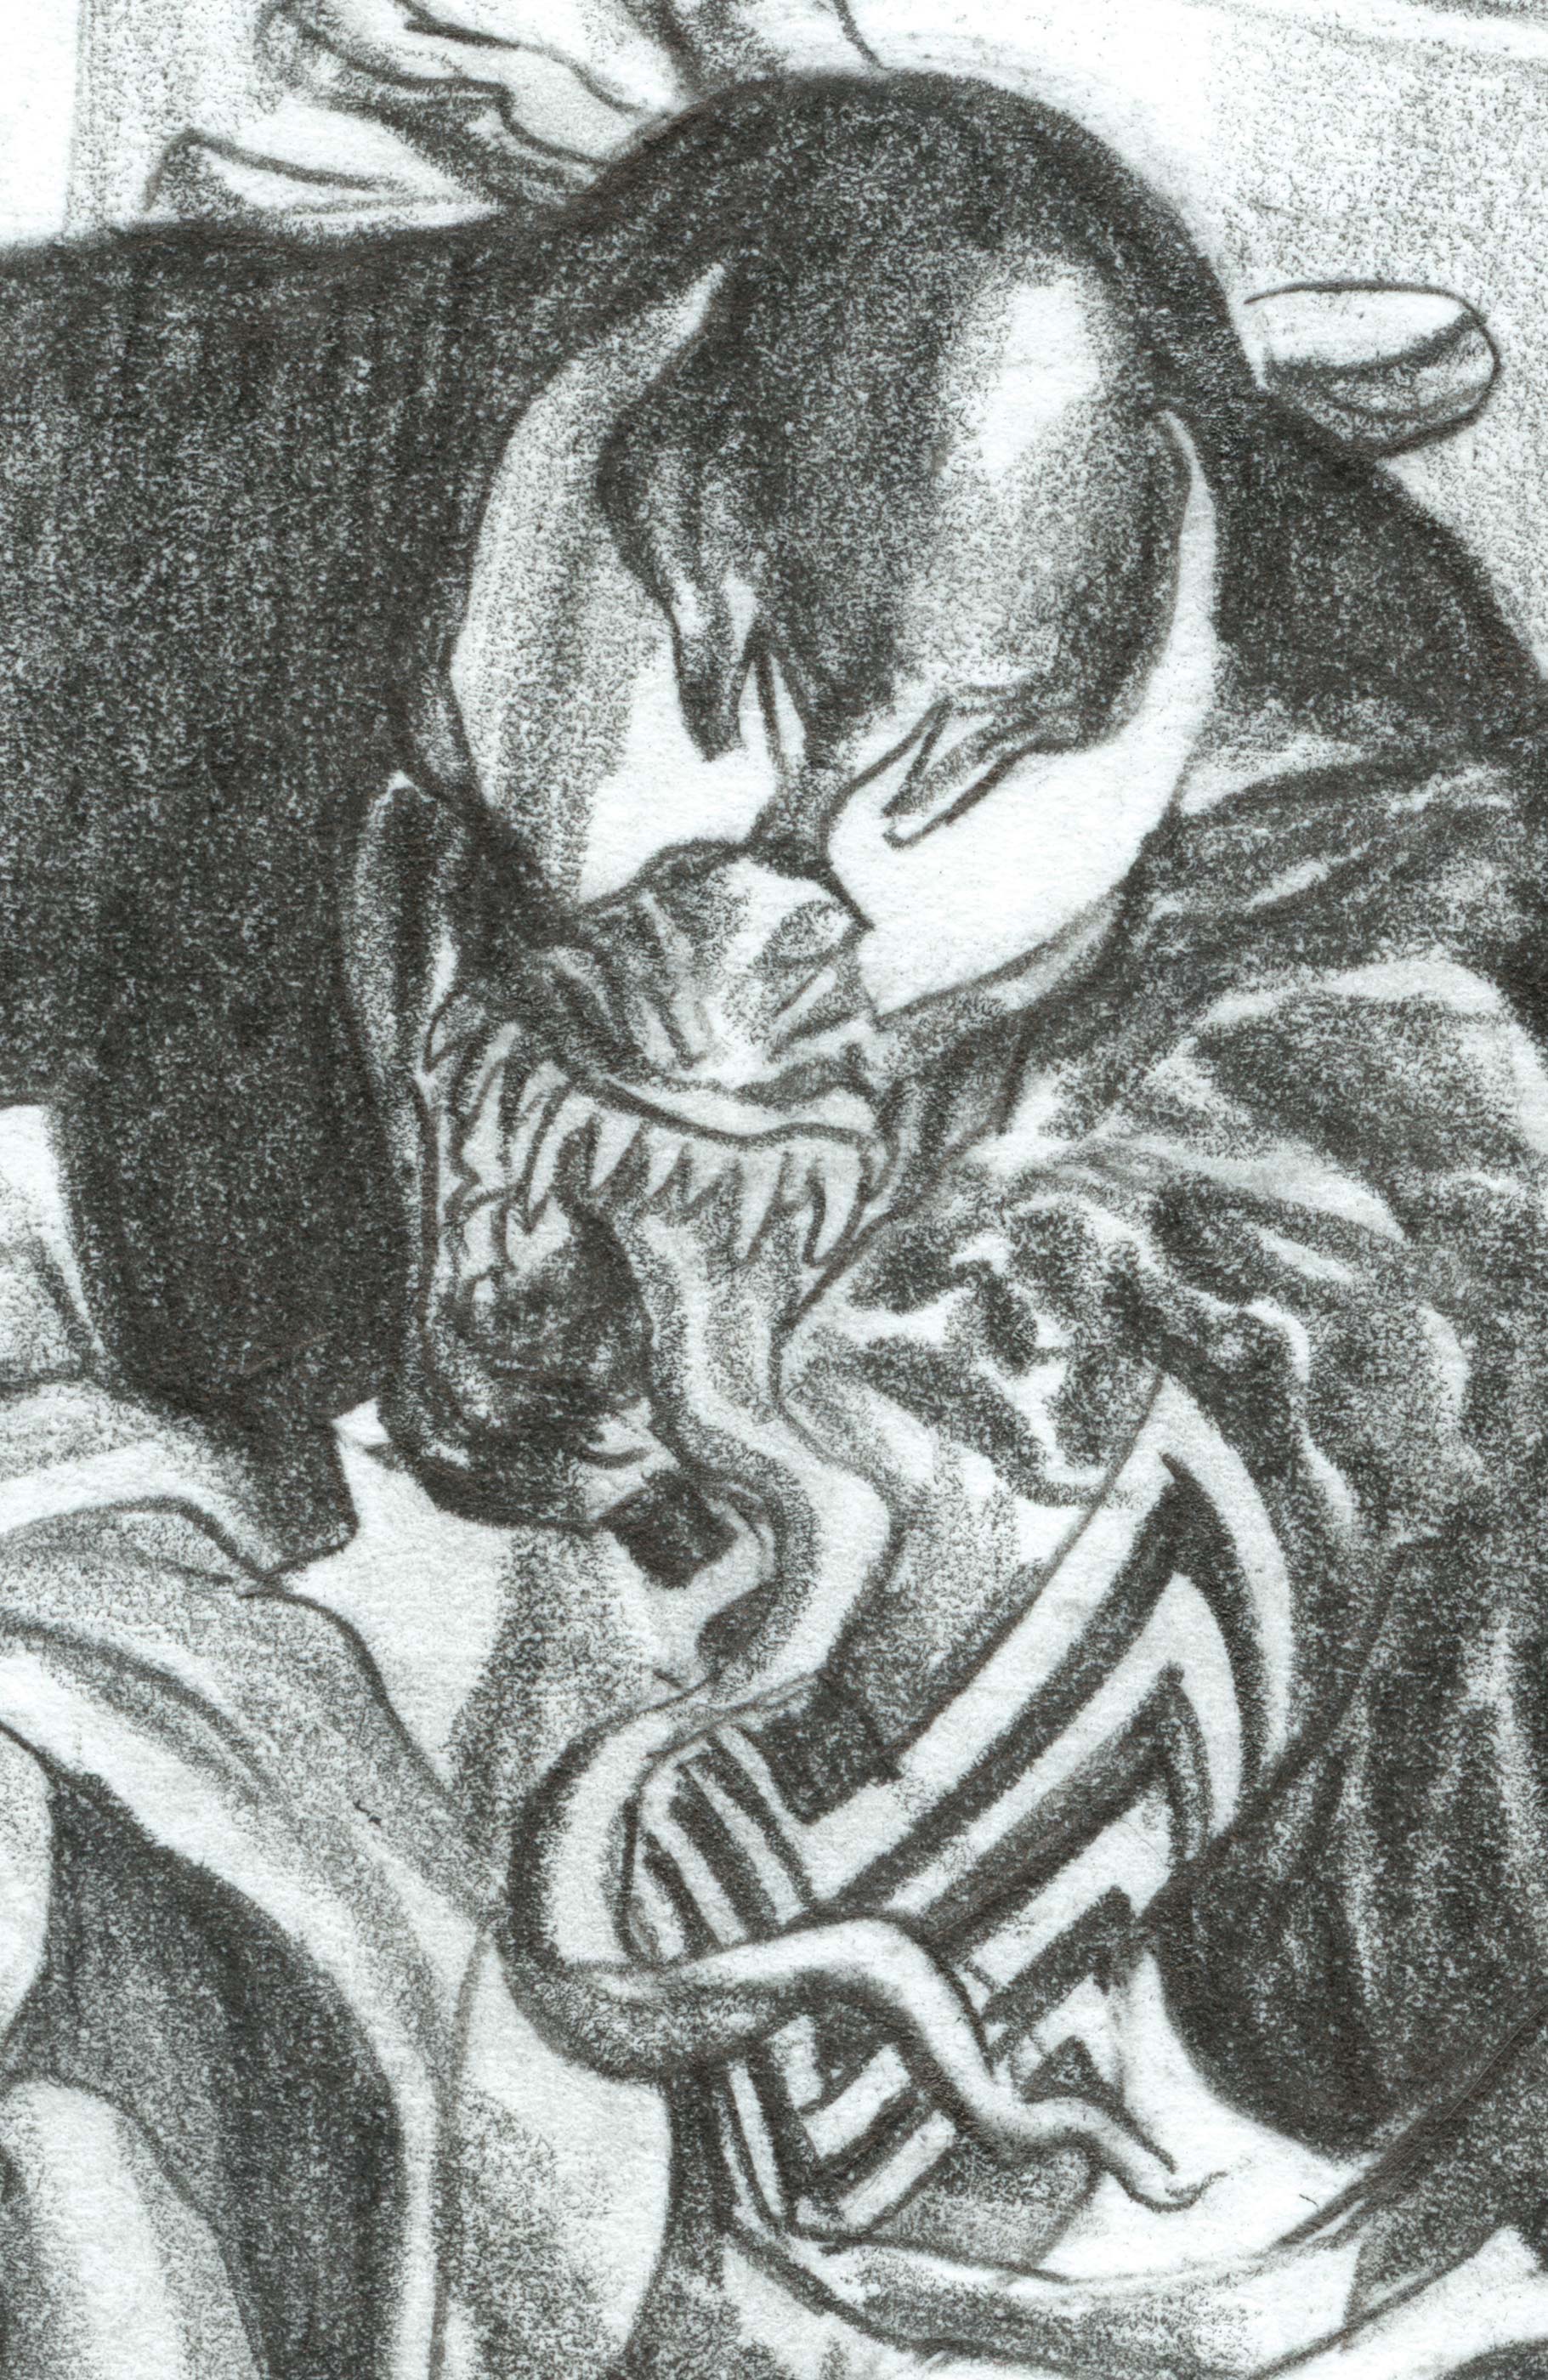 Venom: Lethal Protector II (2023) #1 (Variant)